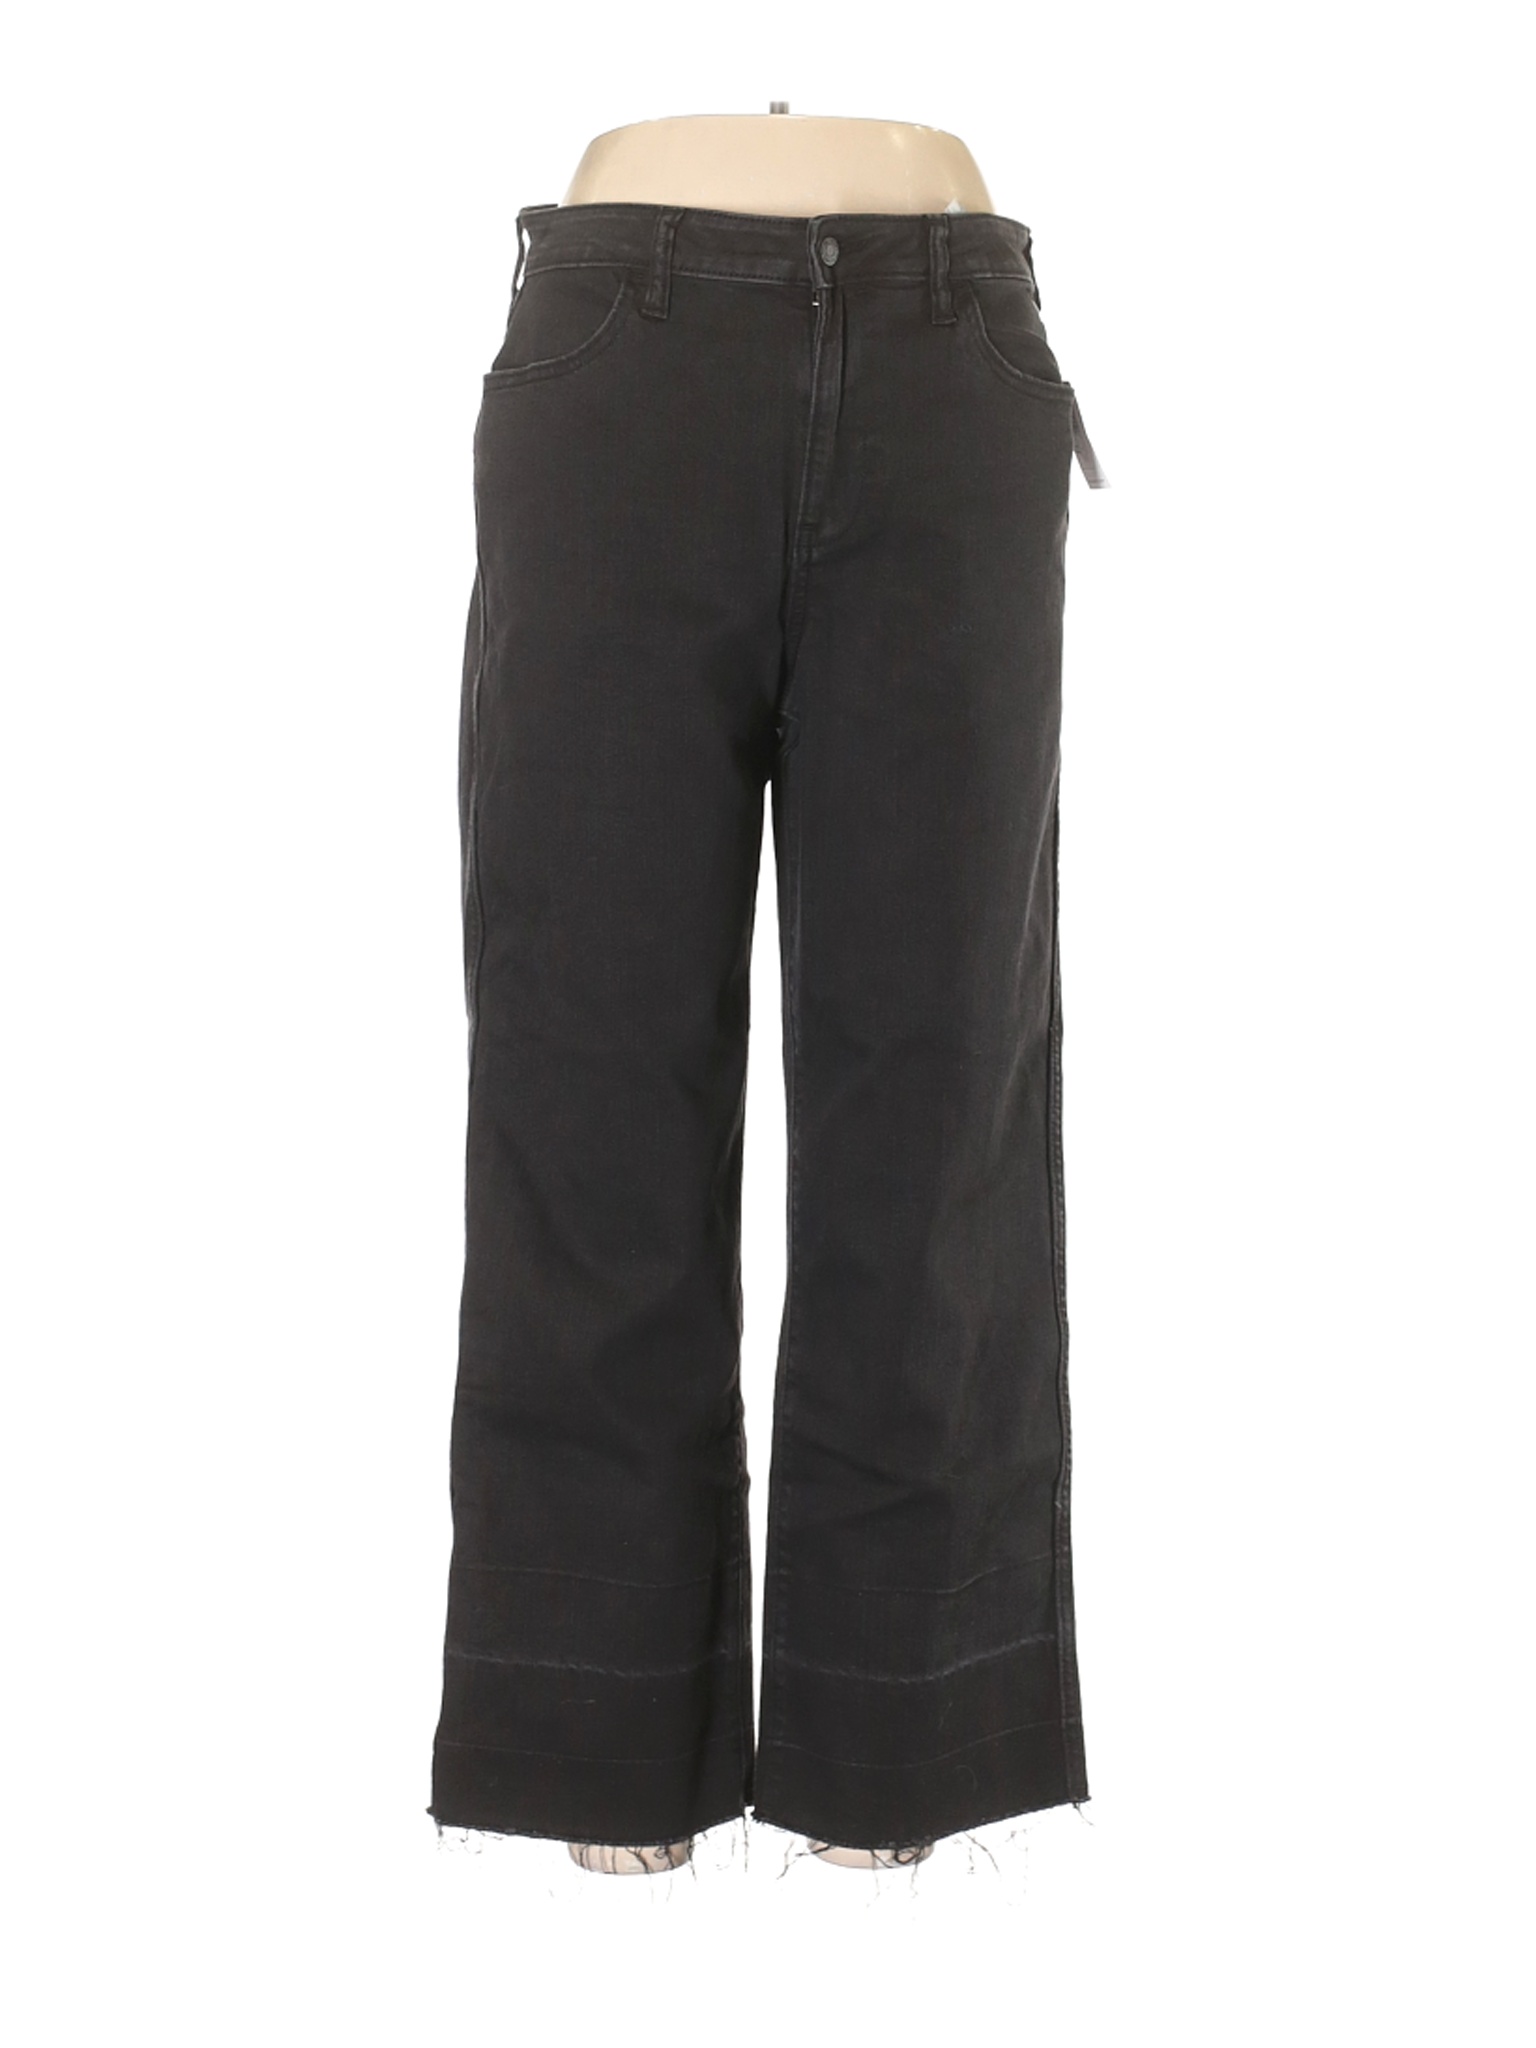 NWT Old Navy Women Black Jeans 14 Tall | eBay